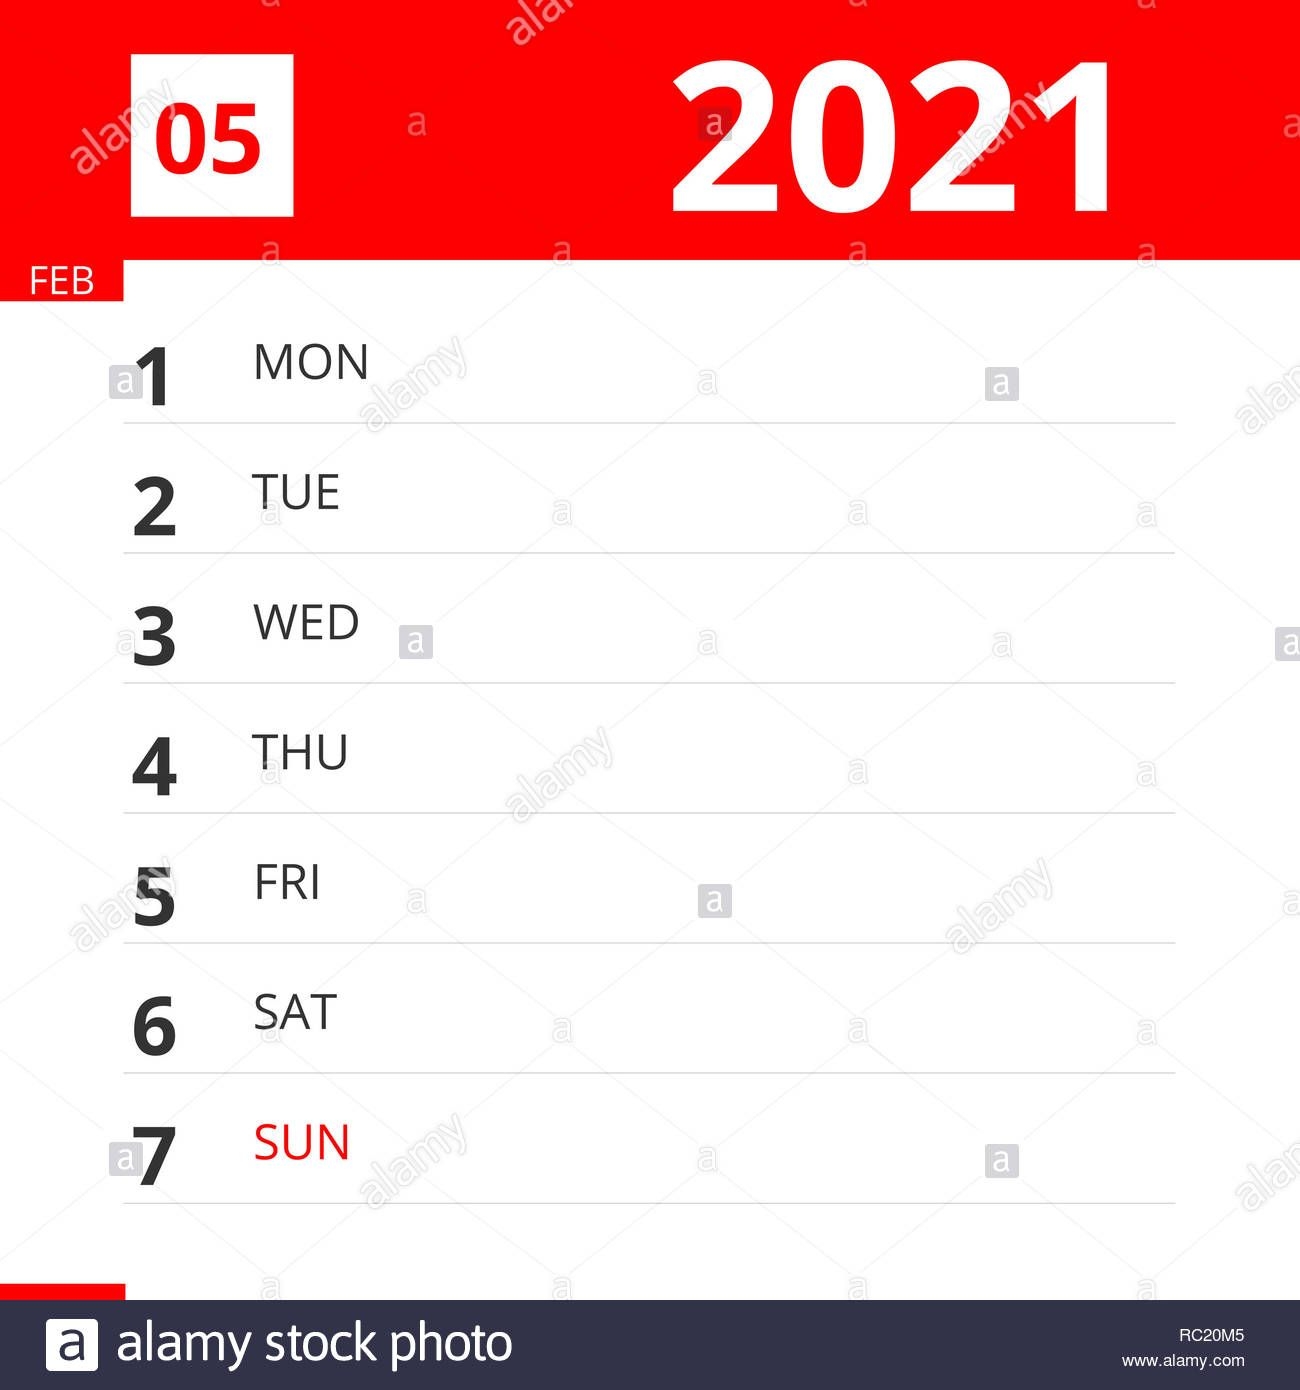 Calendar Planner For Week 05 In 2021, Ends February 7, 2021